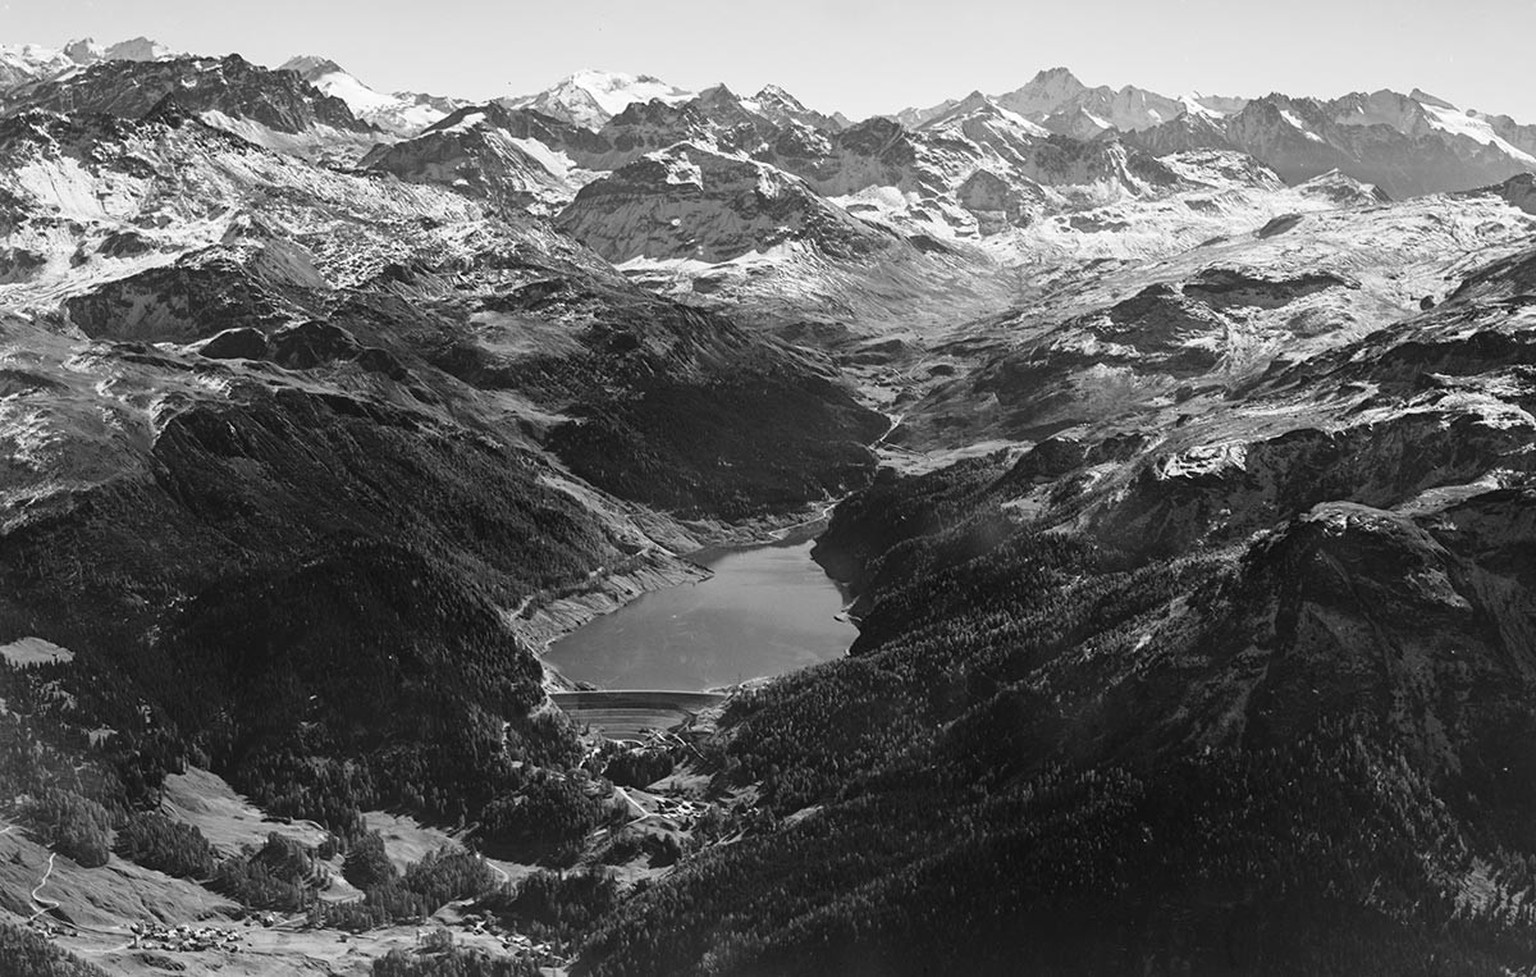 Vue sur le lac de retenue de Marmorera, en 1954.
https://ba.e-pics.ethz.ch/catalog/ETHBIB.Bildarchiv/r/531400/viewmode=infoview